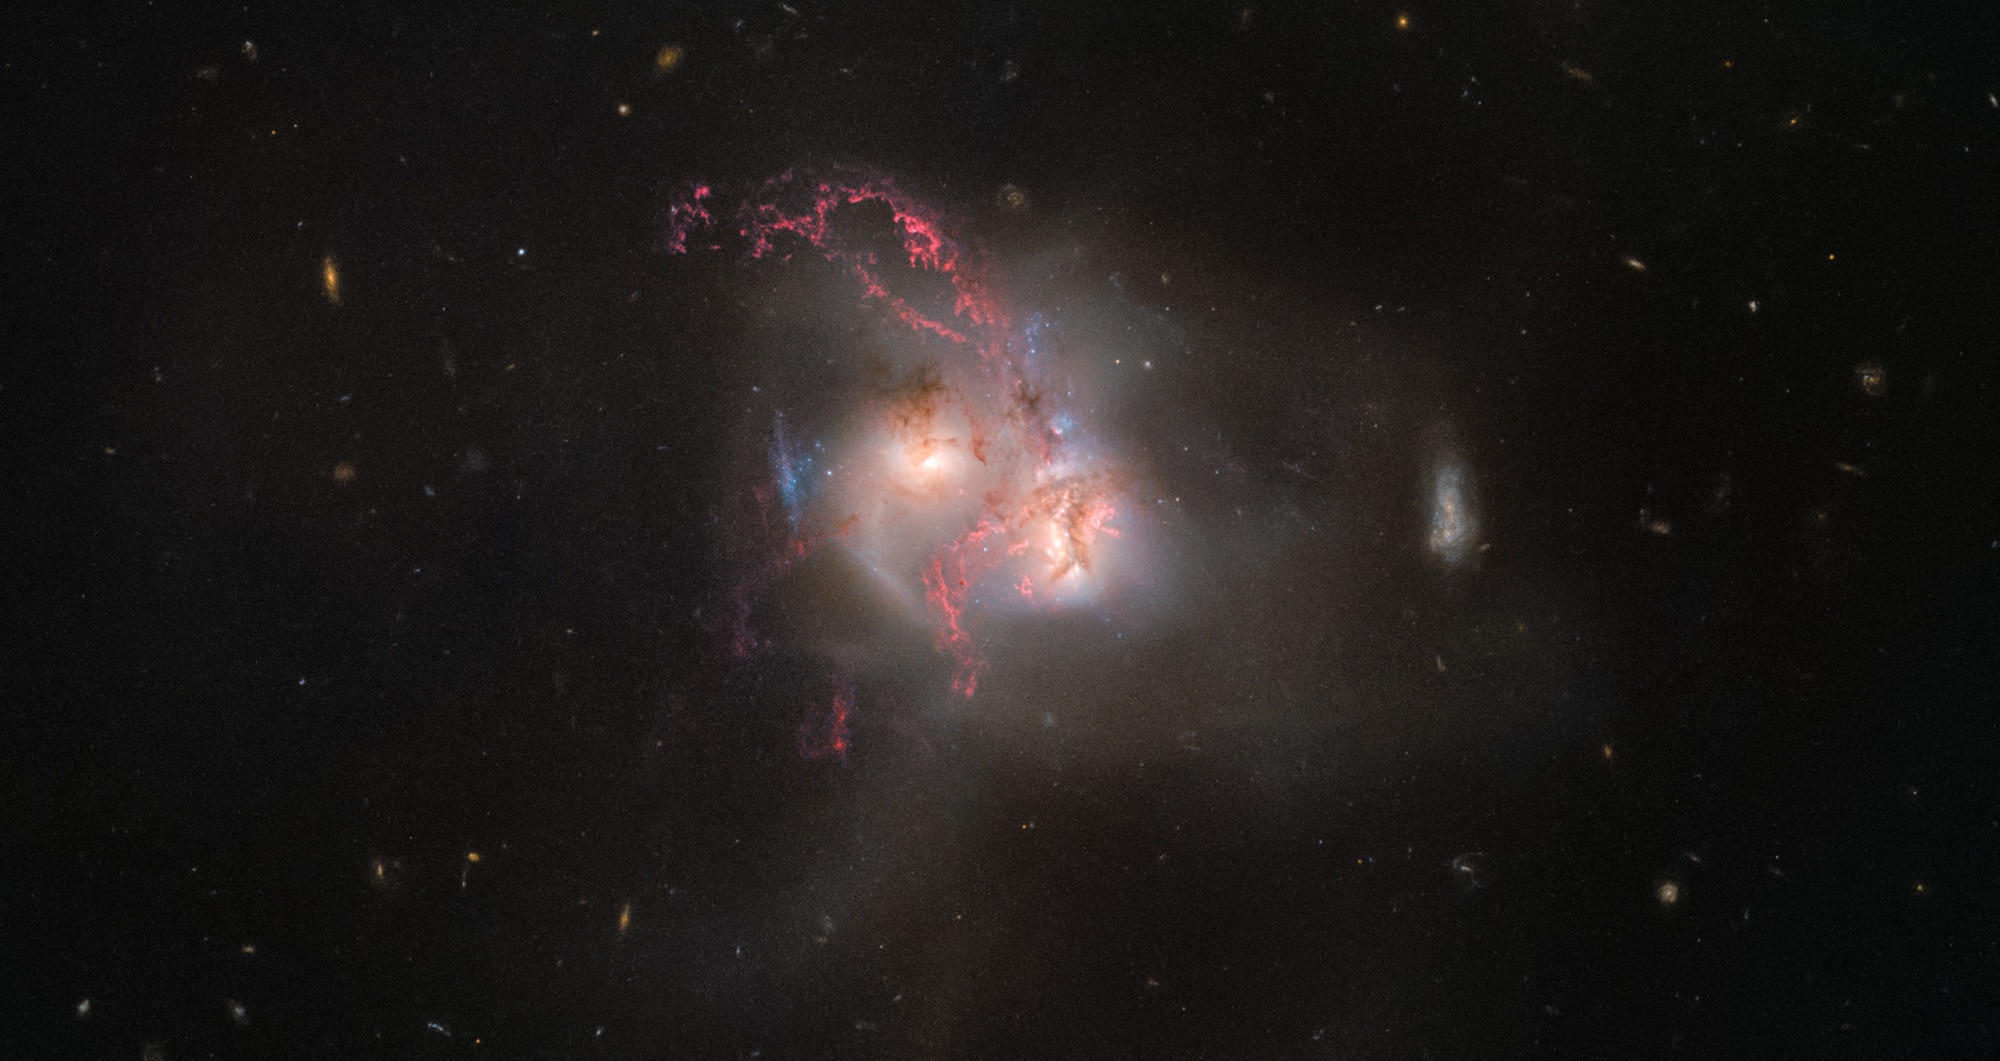 NGC 5256, a pair of colliding galaxies 350 million light years away. Credit: ESA/Hubble, NASA